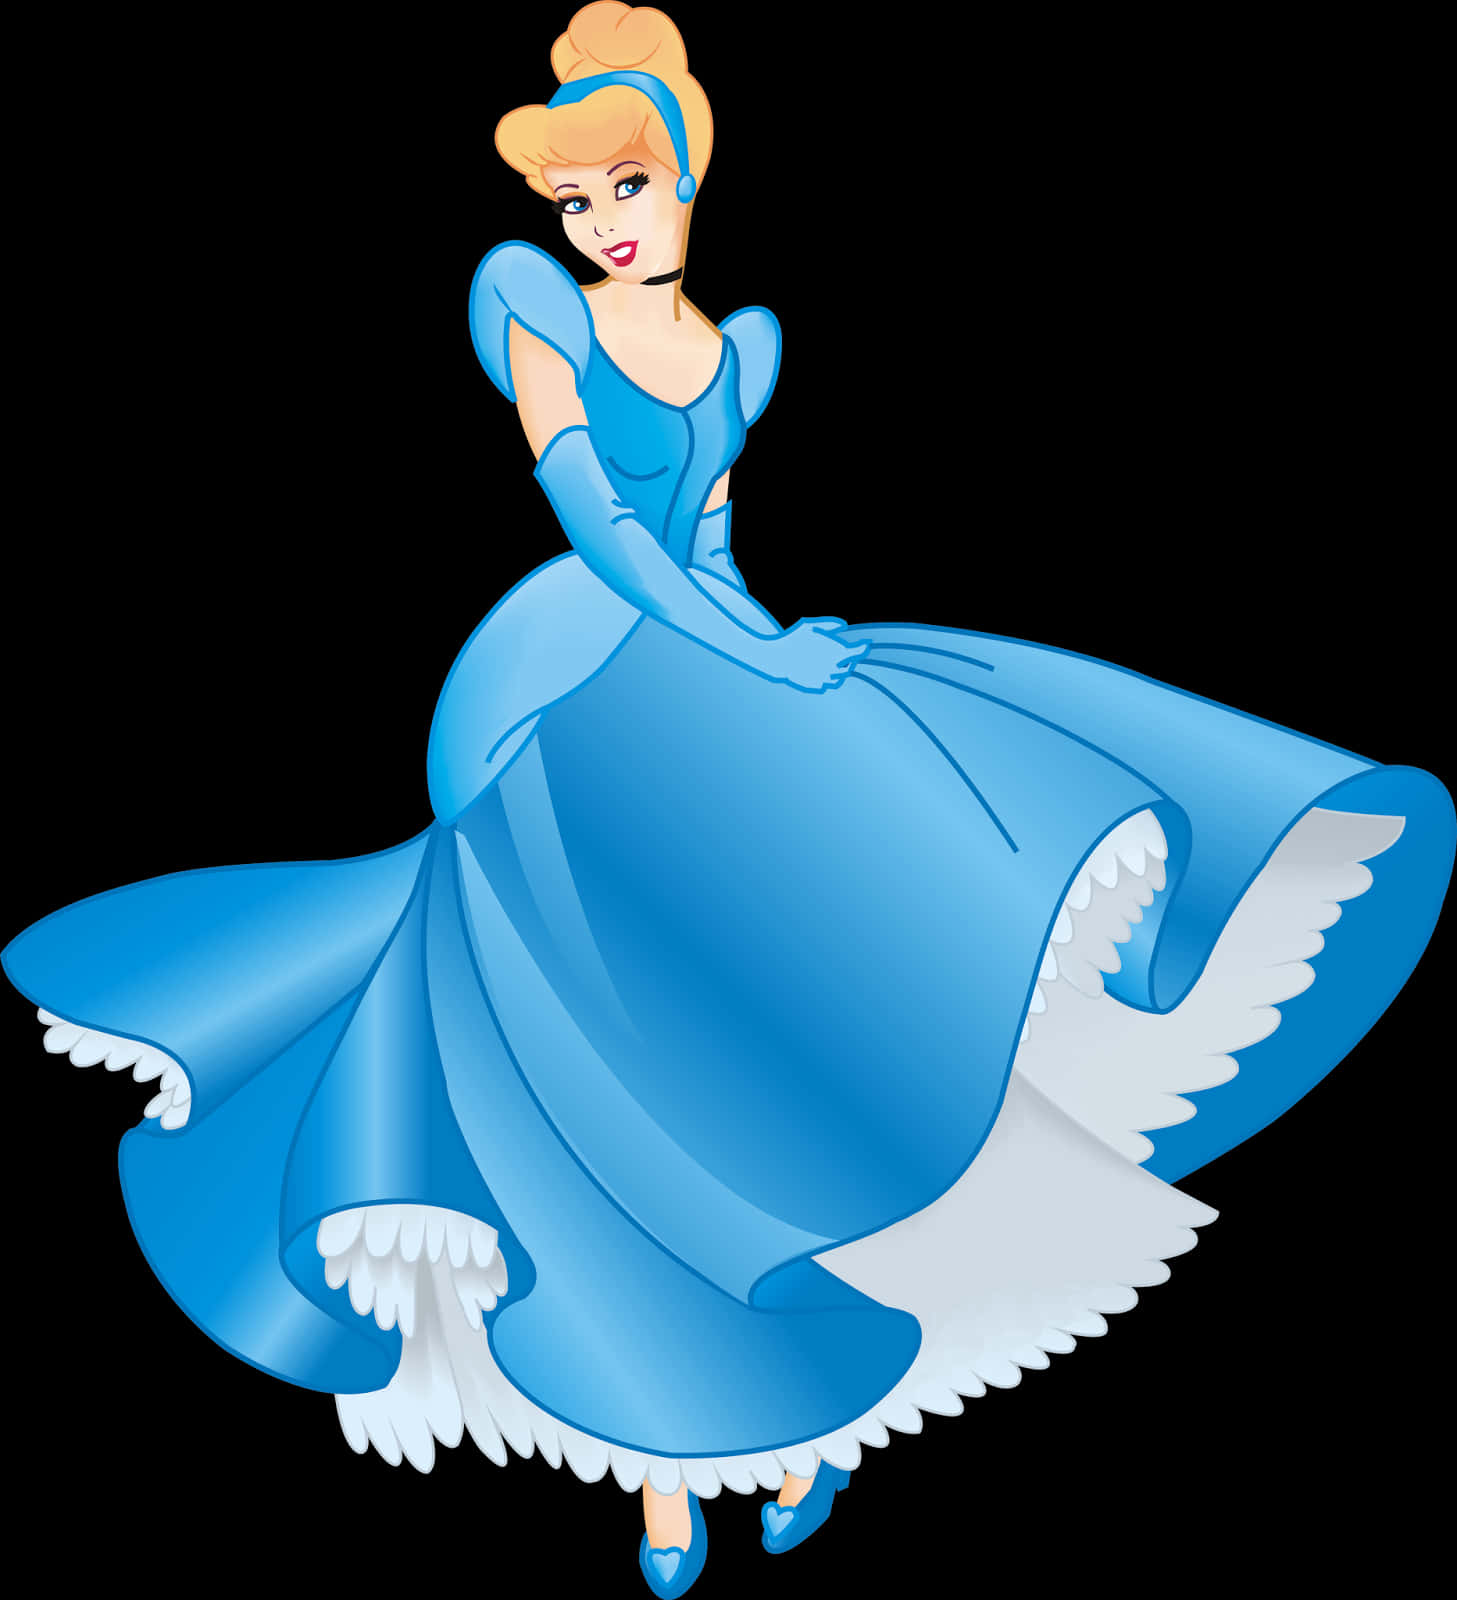 Disney Princess Cinderella In Blue Dress